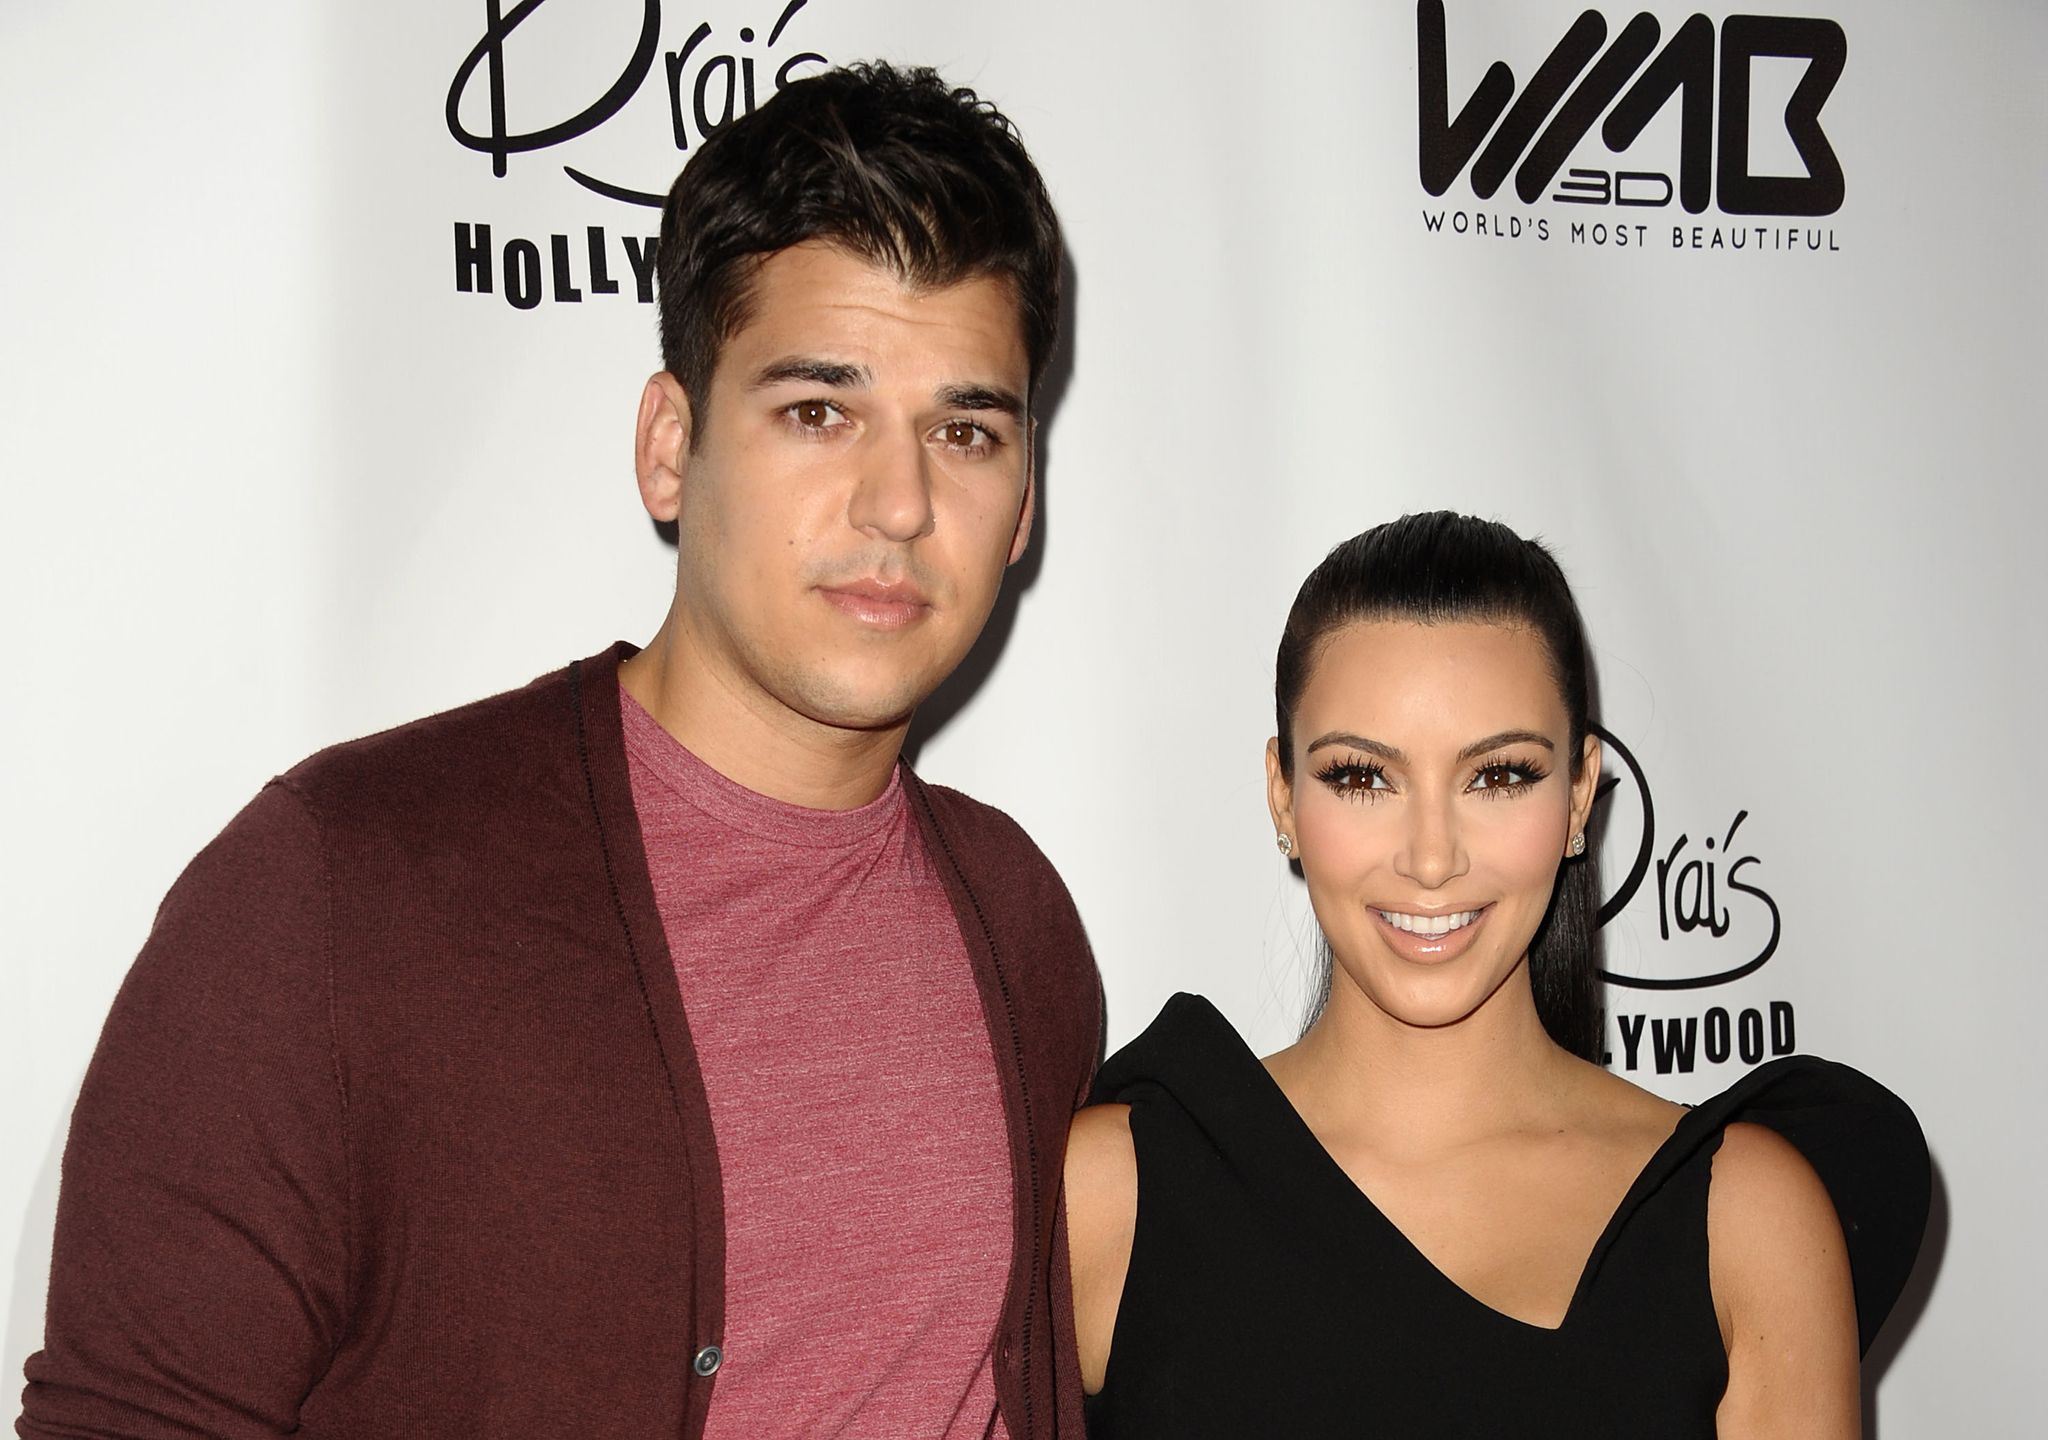 Kim Kardashian's brother Rob Kardashian: Where is he now?